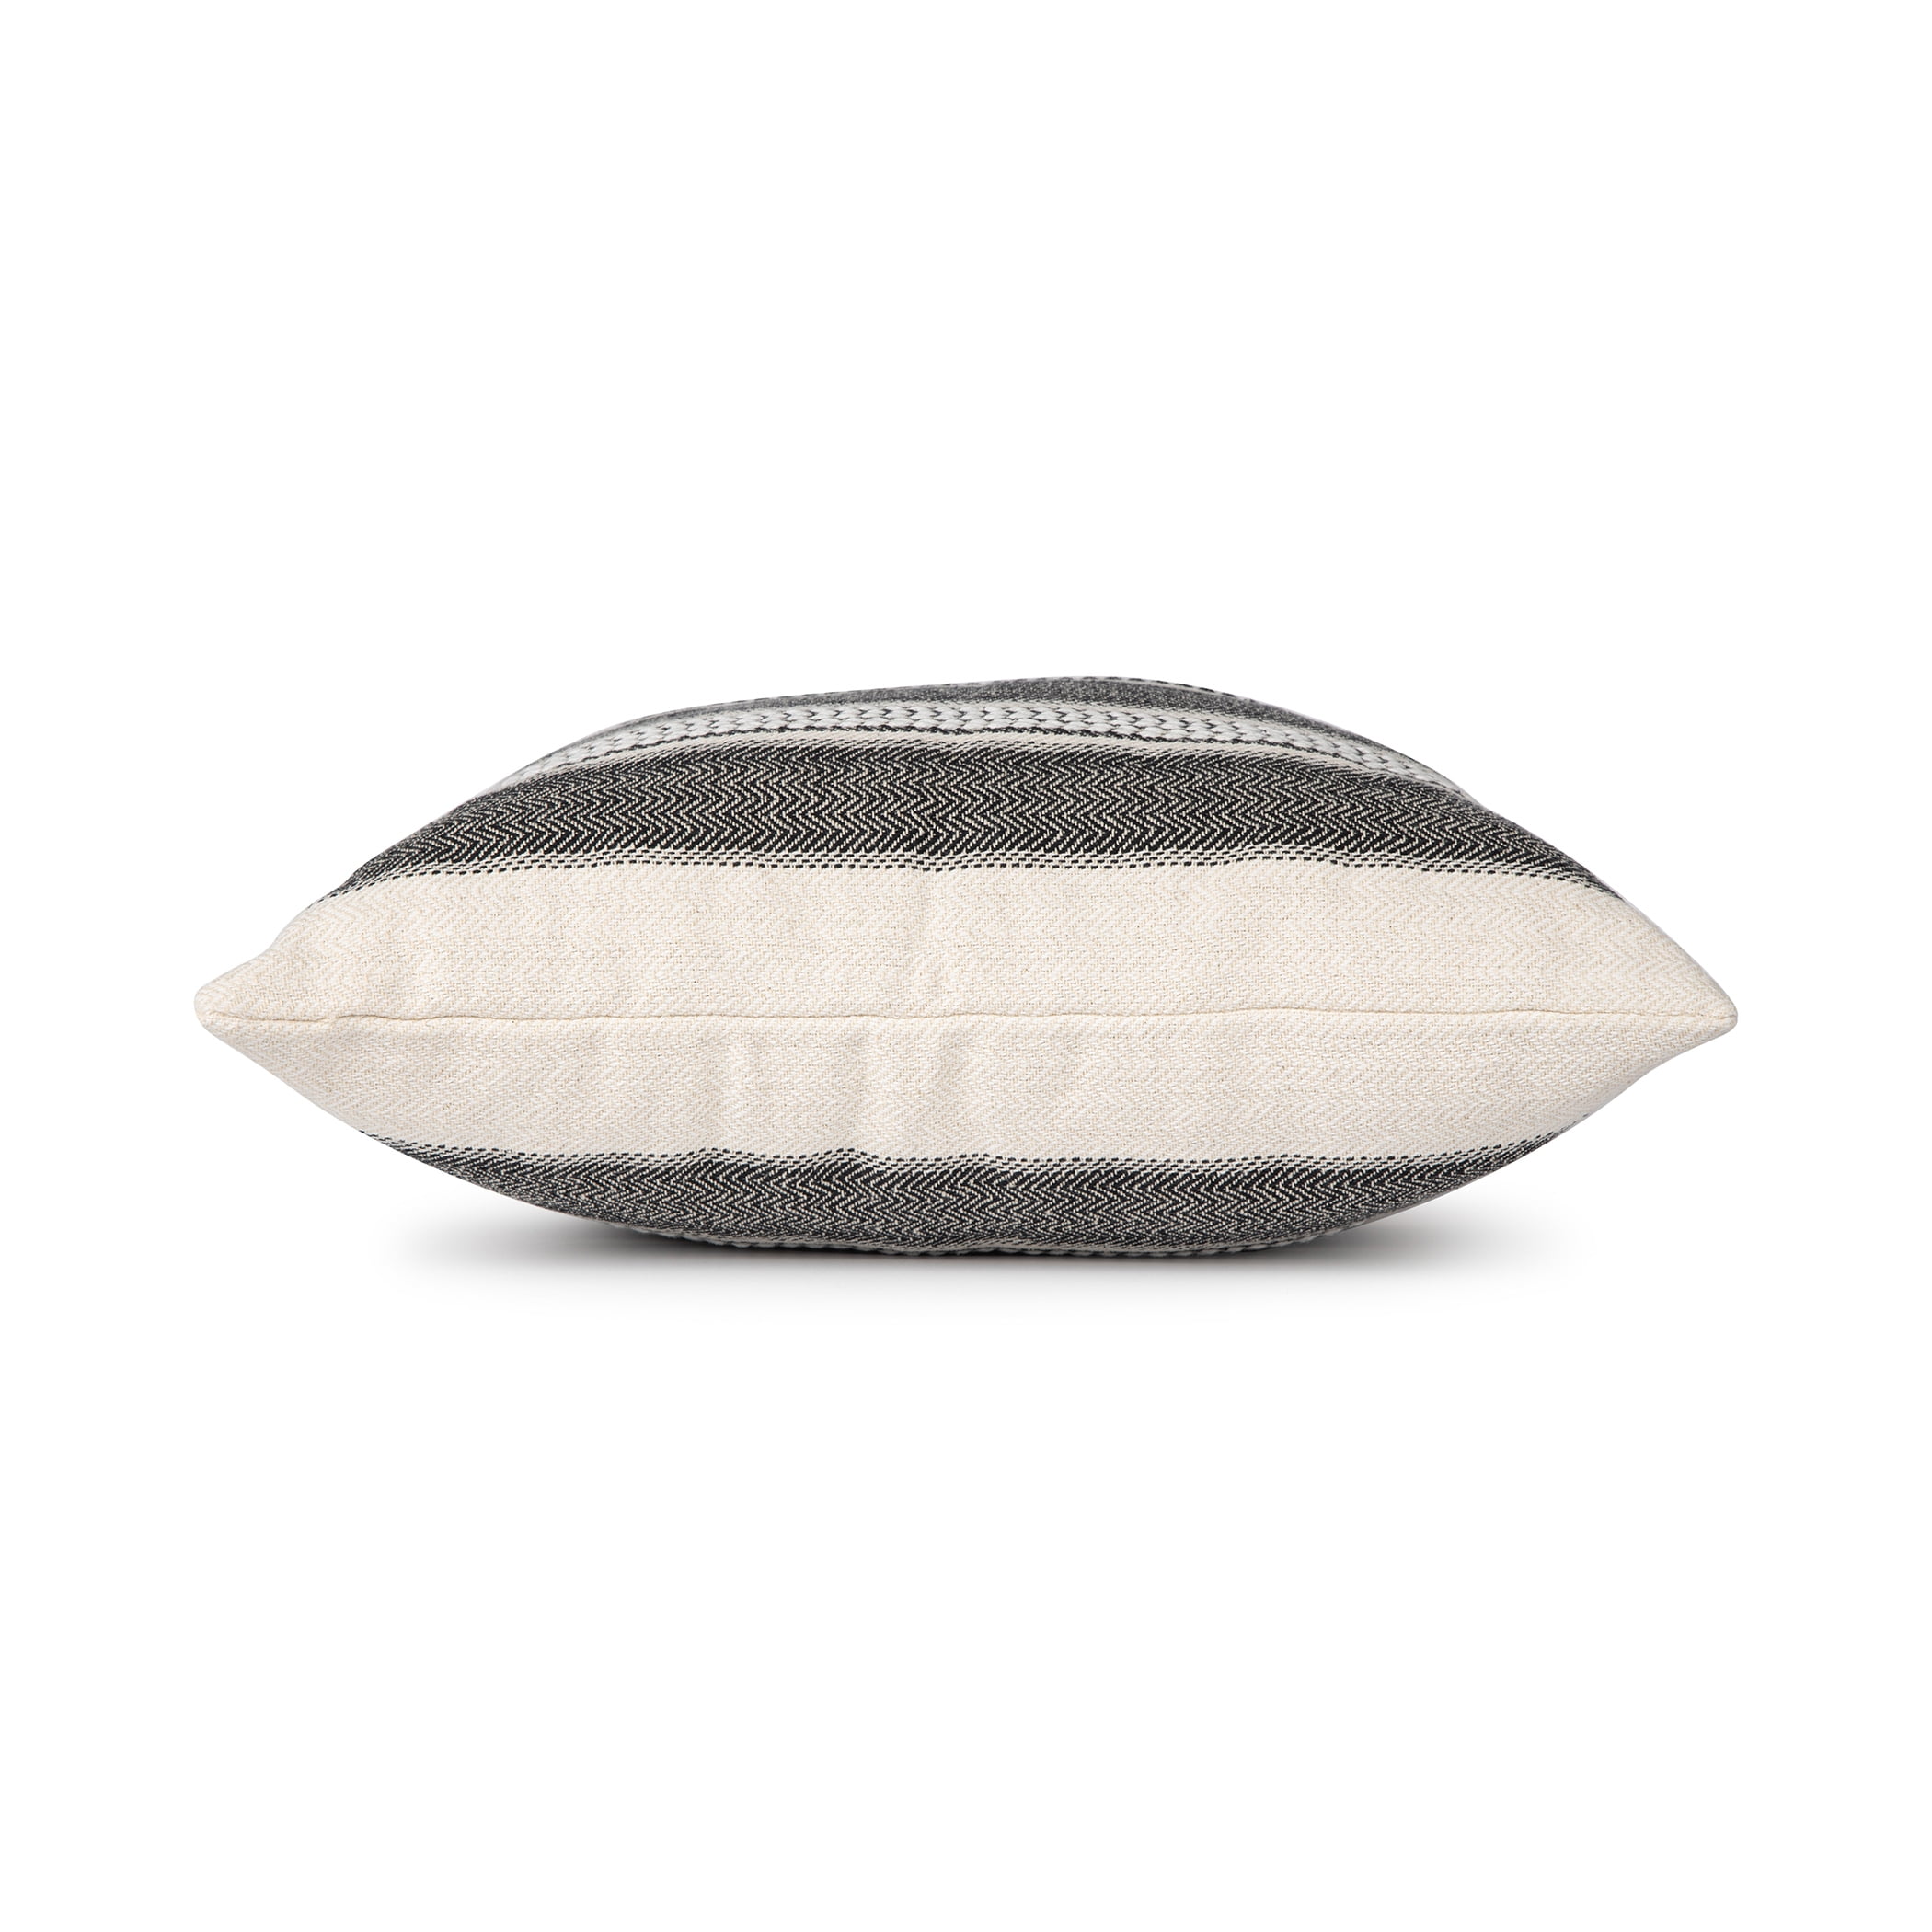 Buy Indoor Duralee Royal - 18x18 Vertical Stripes Throw Pillow